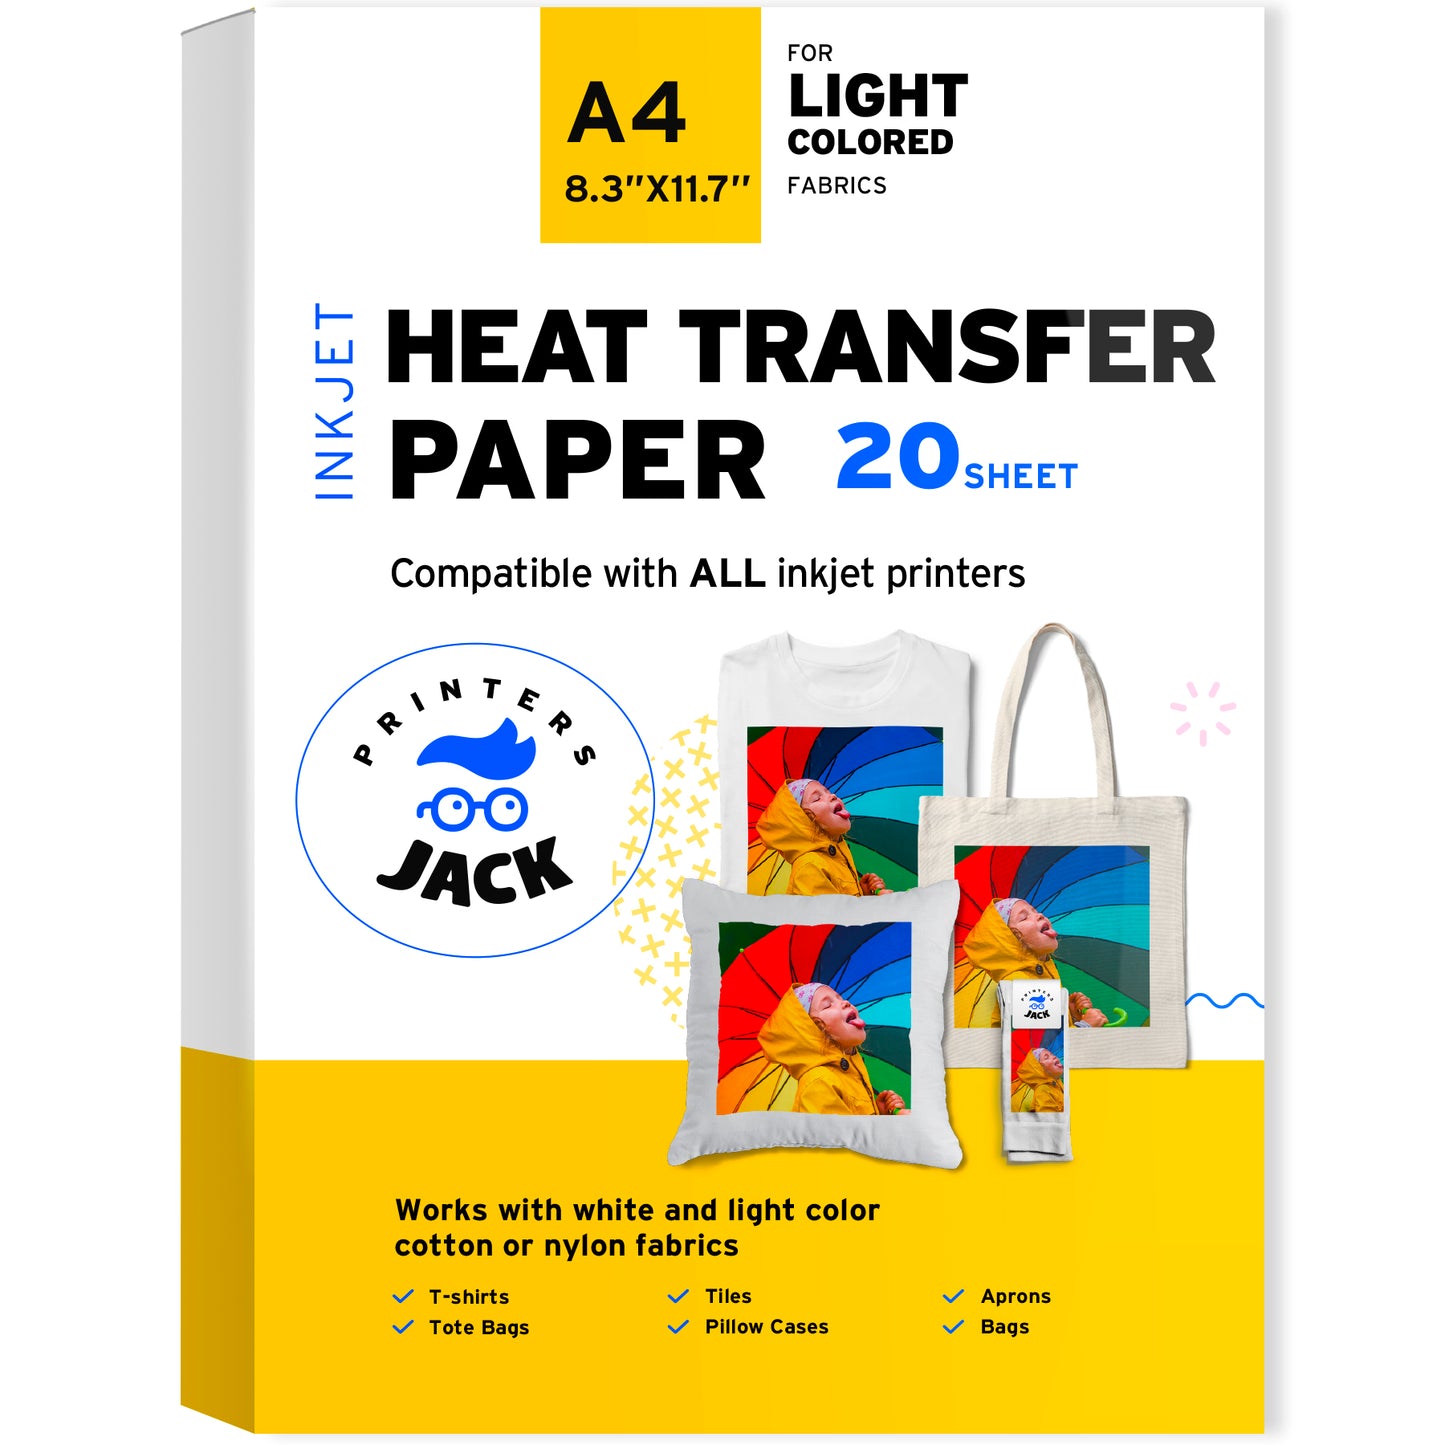 Light Color Iron-on Heat Transfer Paper